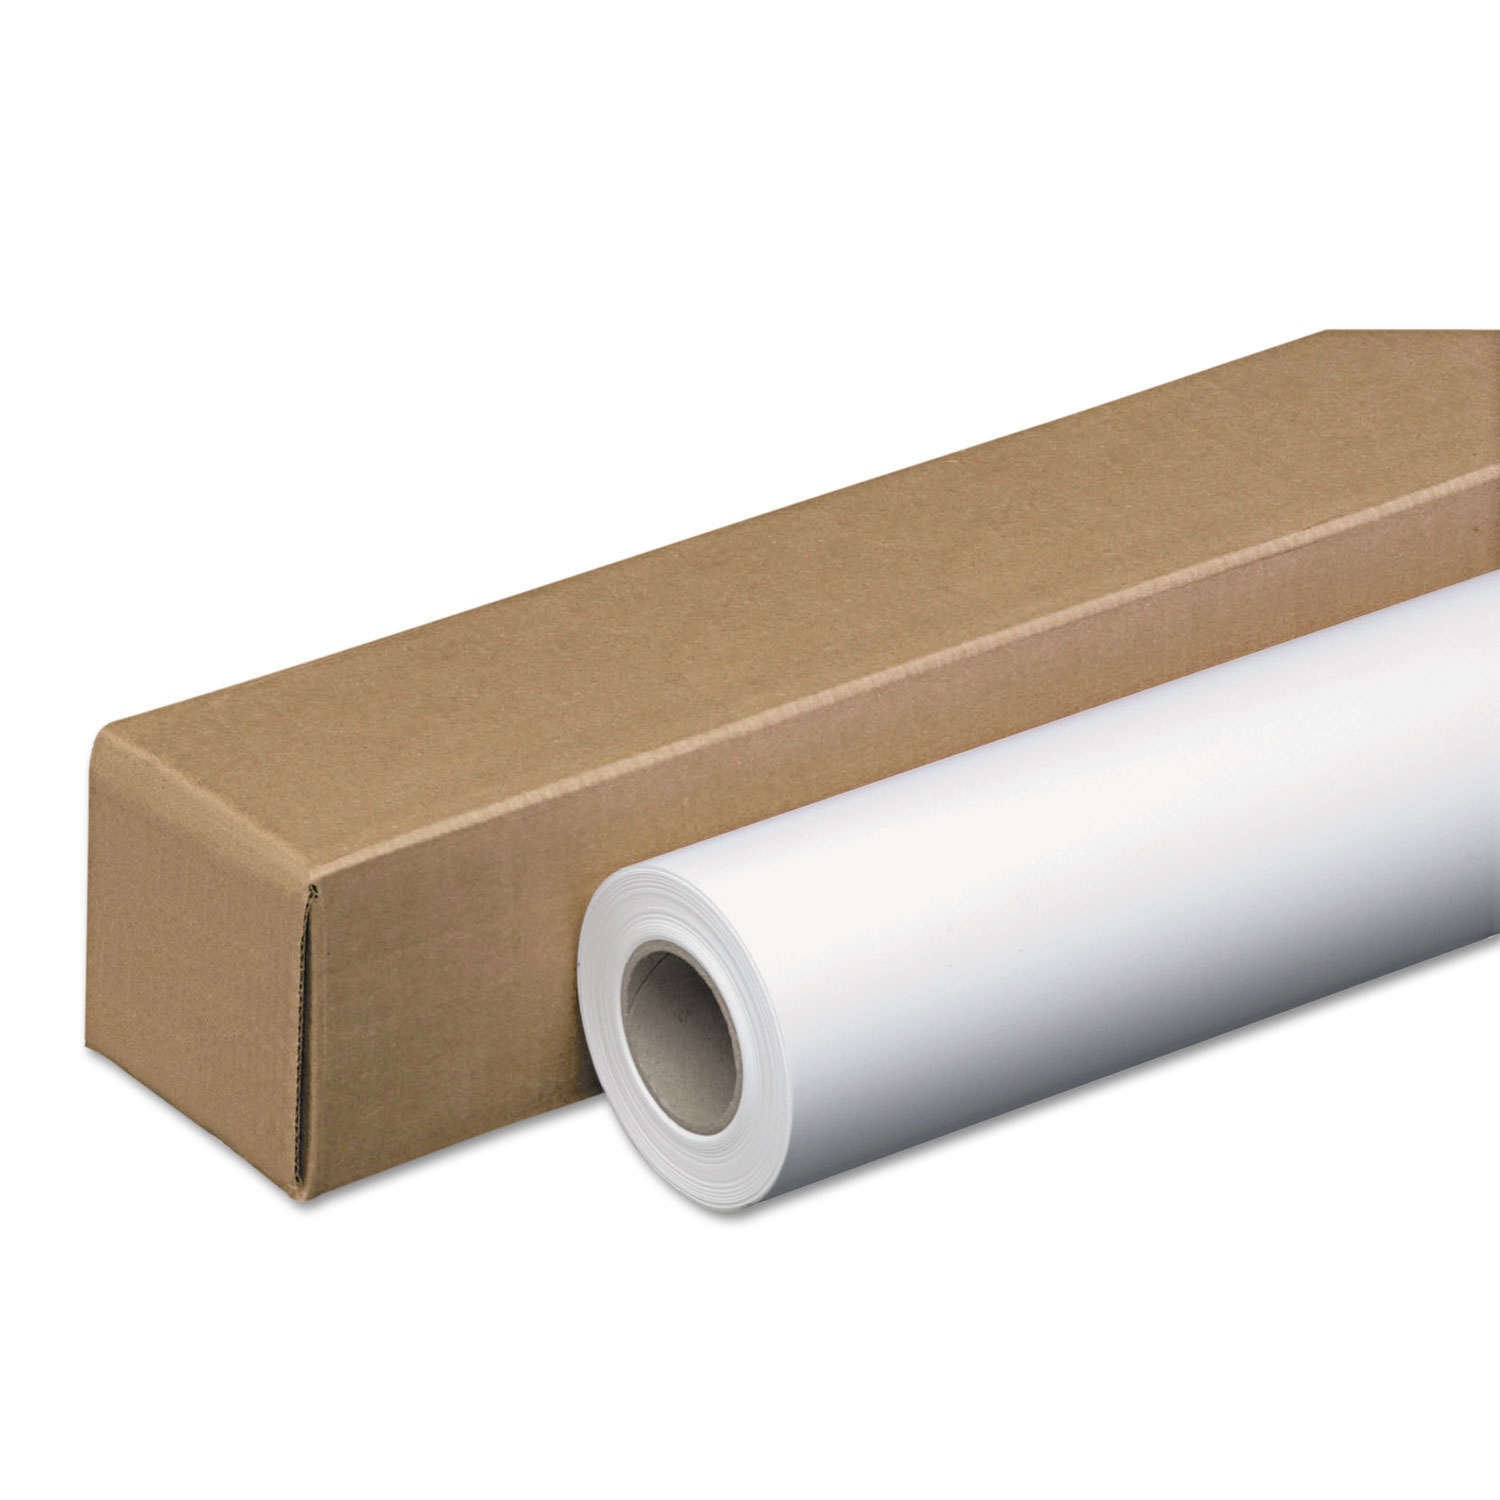  Iconex 46124 Amerigo Wide-Format Paper, 3 Core, 48 lb, 24 x 100 ft, Coated White (ICX90750217) 